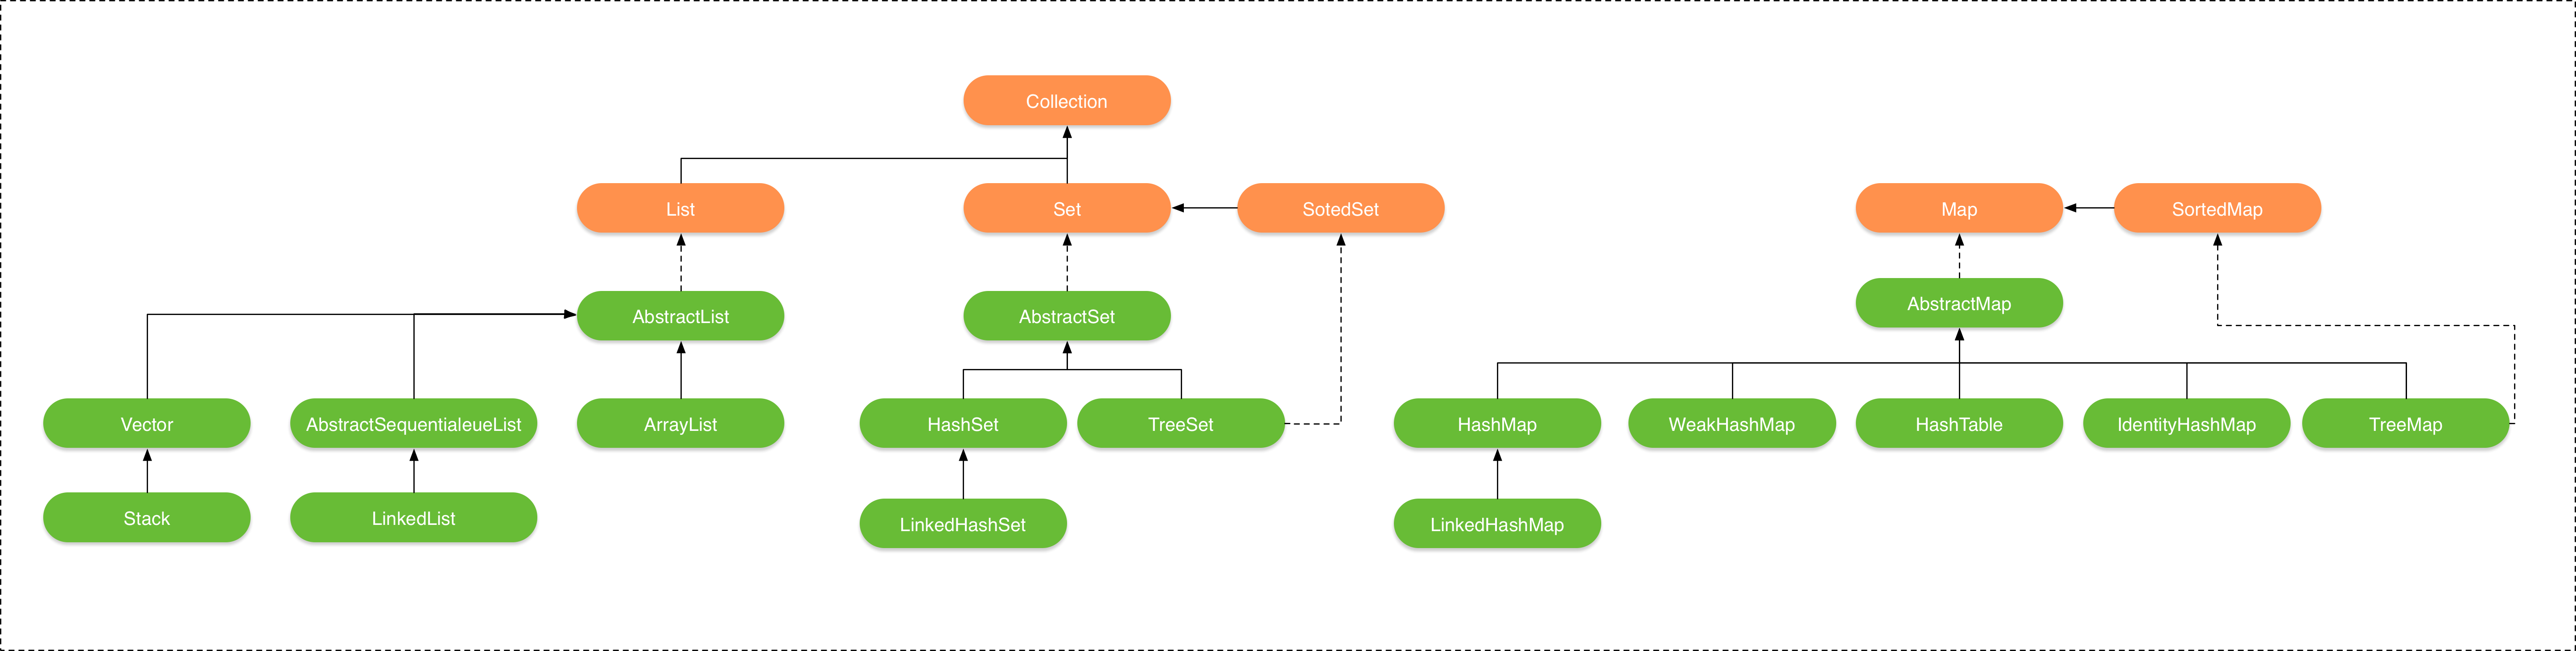 Java集合的类结构图